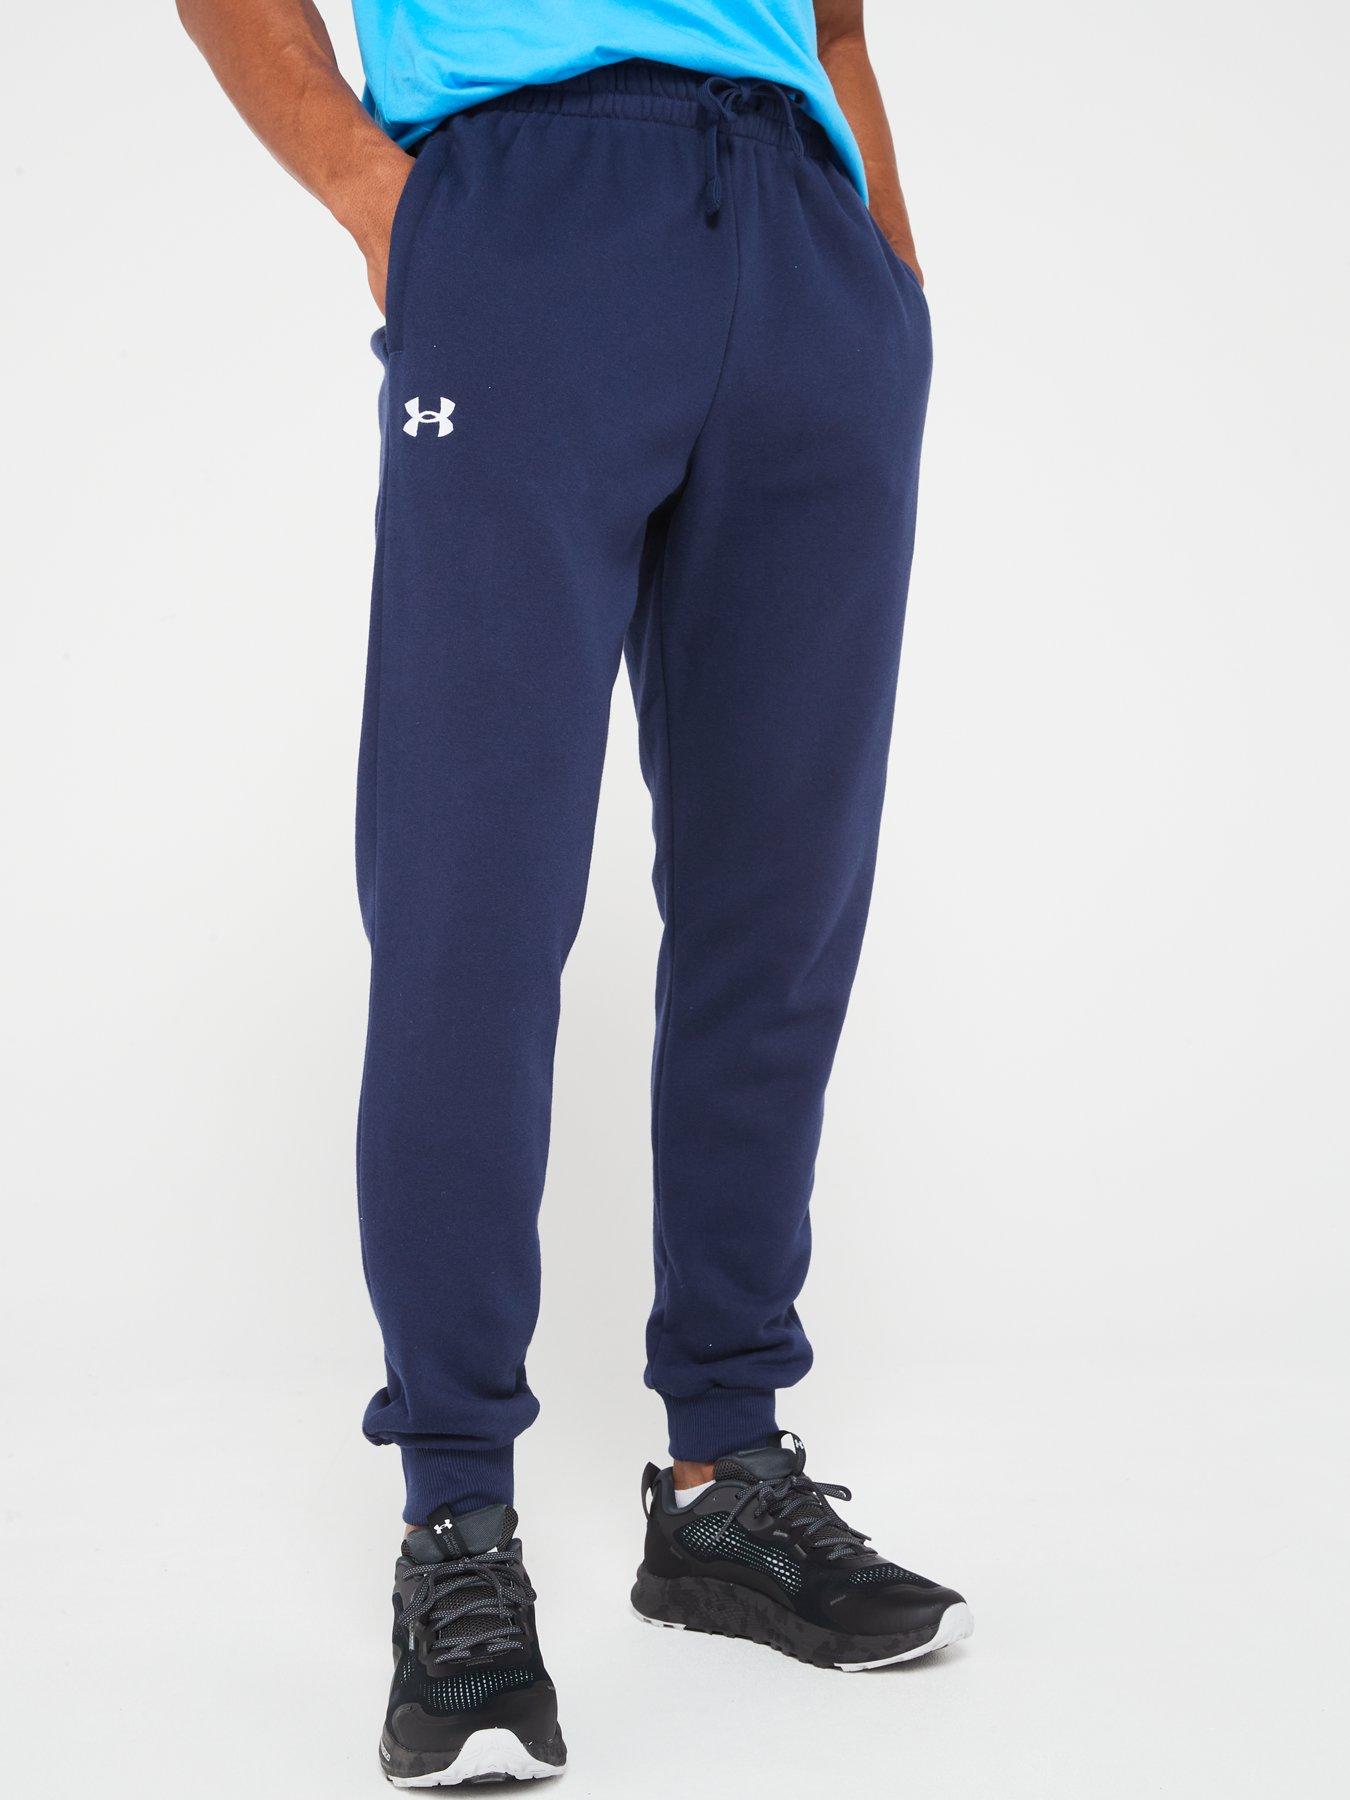 XL, Jogging bottoms, Mens sports clothing